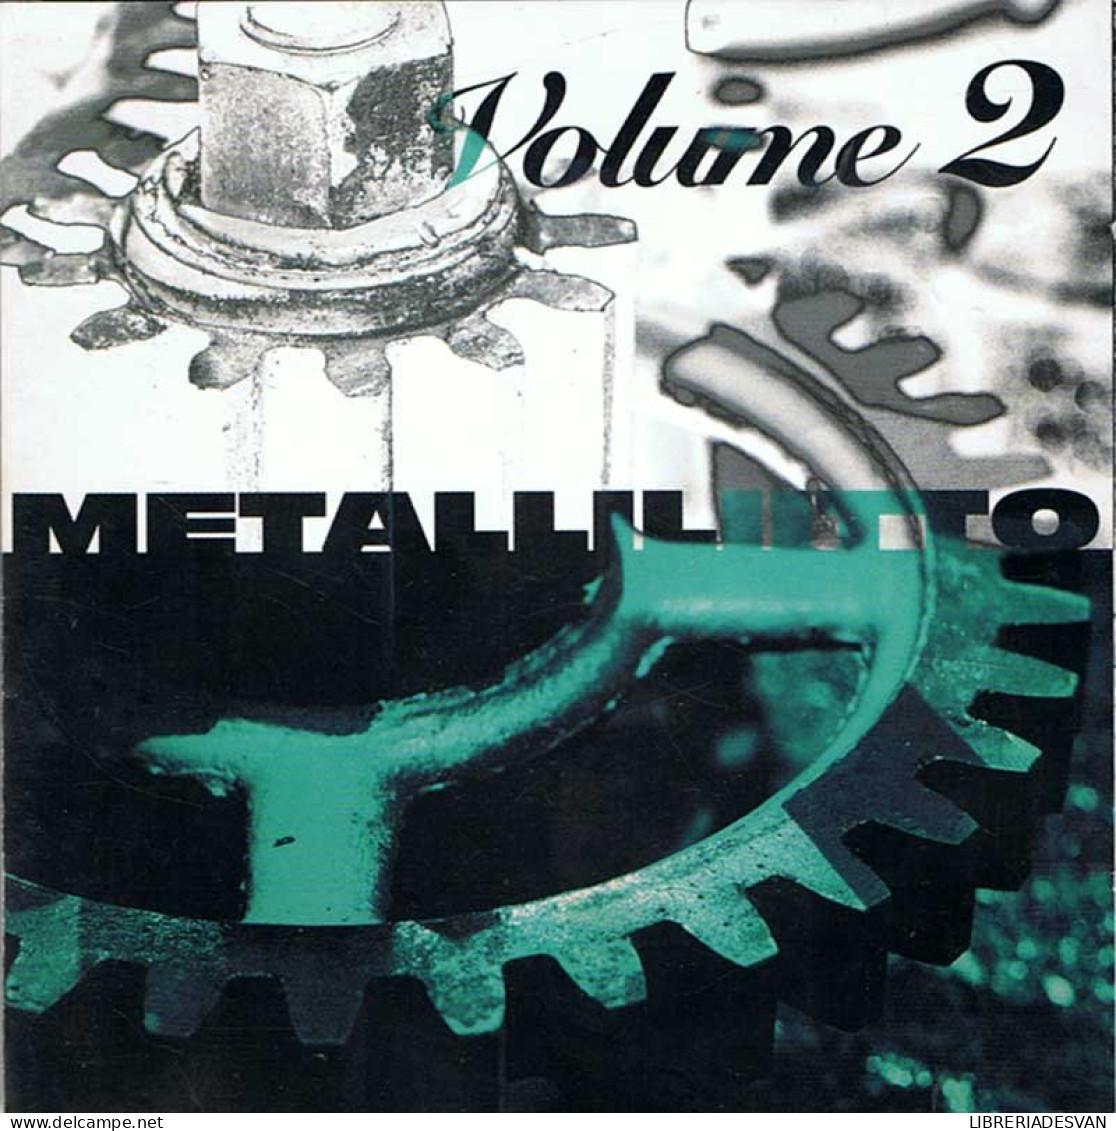 Varios - Metalliliitto: Volume 2. CD - Rock